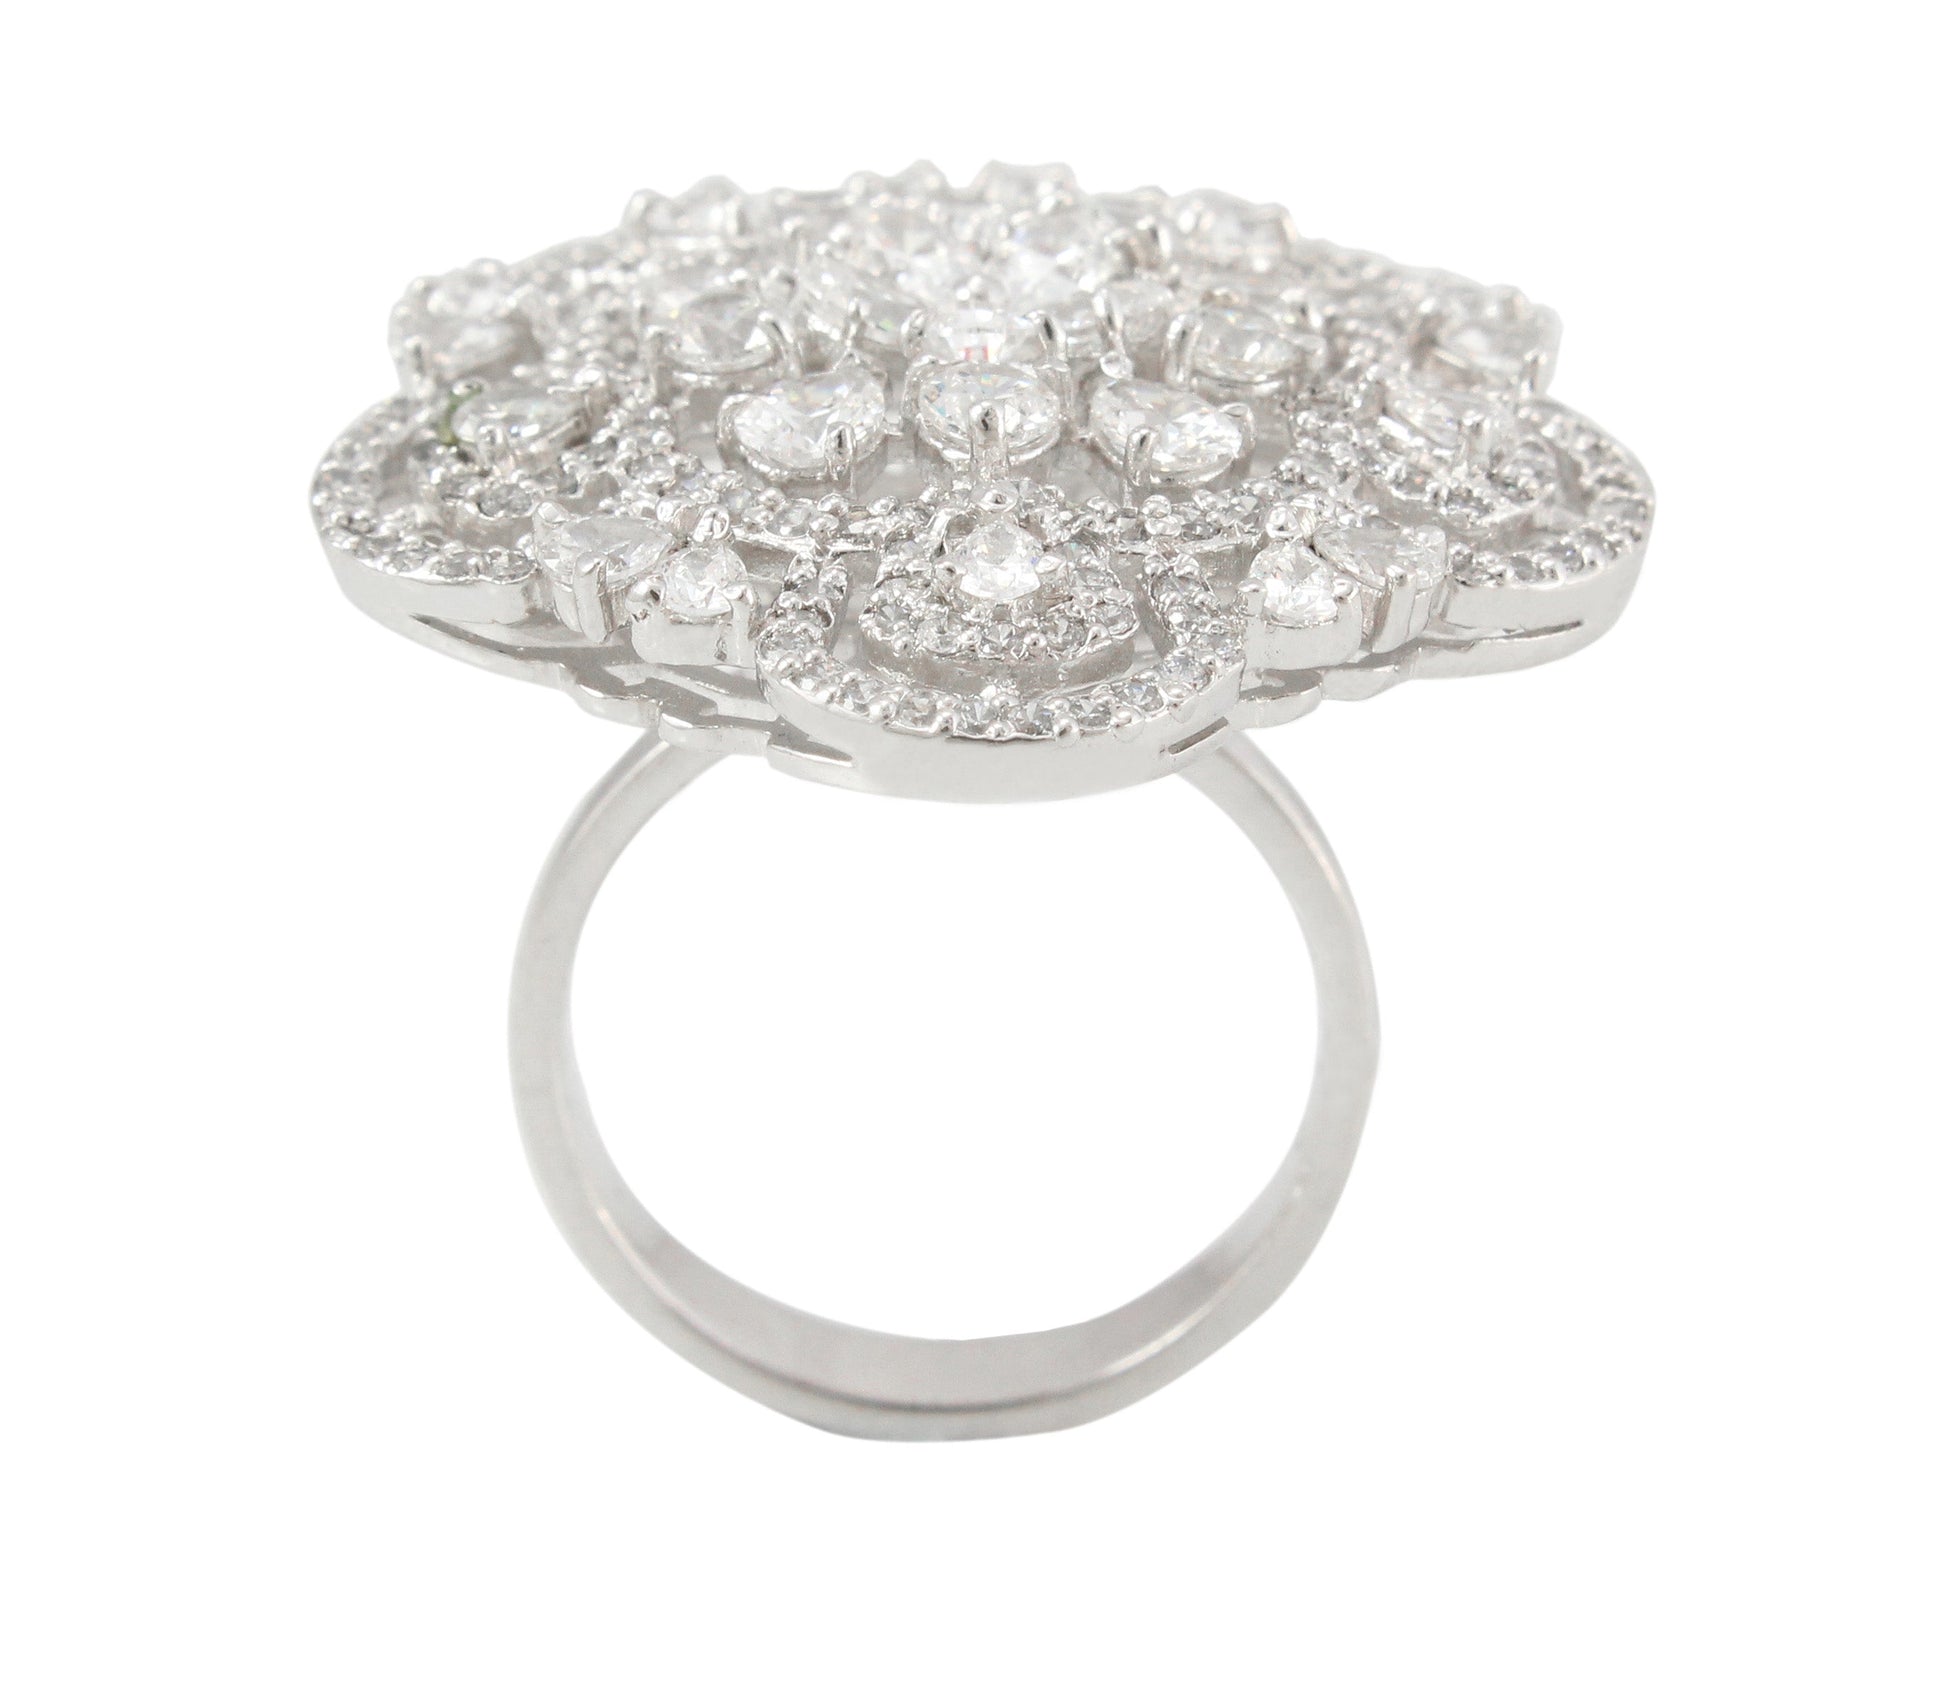 925 Sterling Silver Swarovski Stones Flower Shape Cocktail Ring For Girls And Women